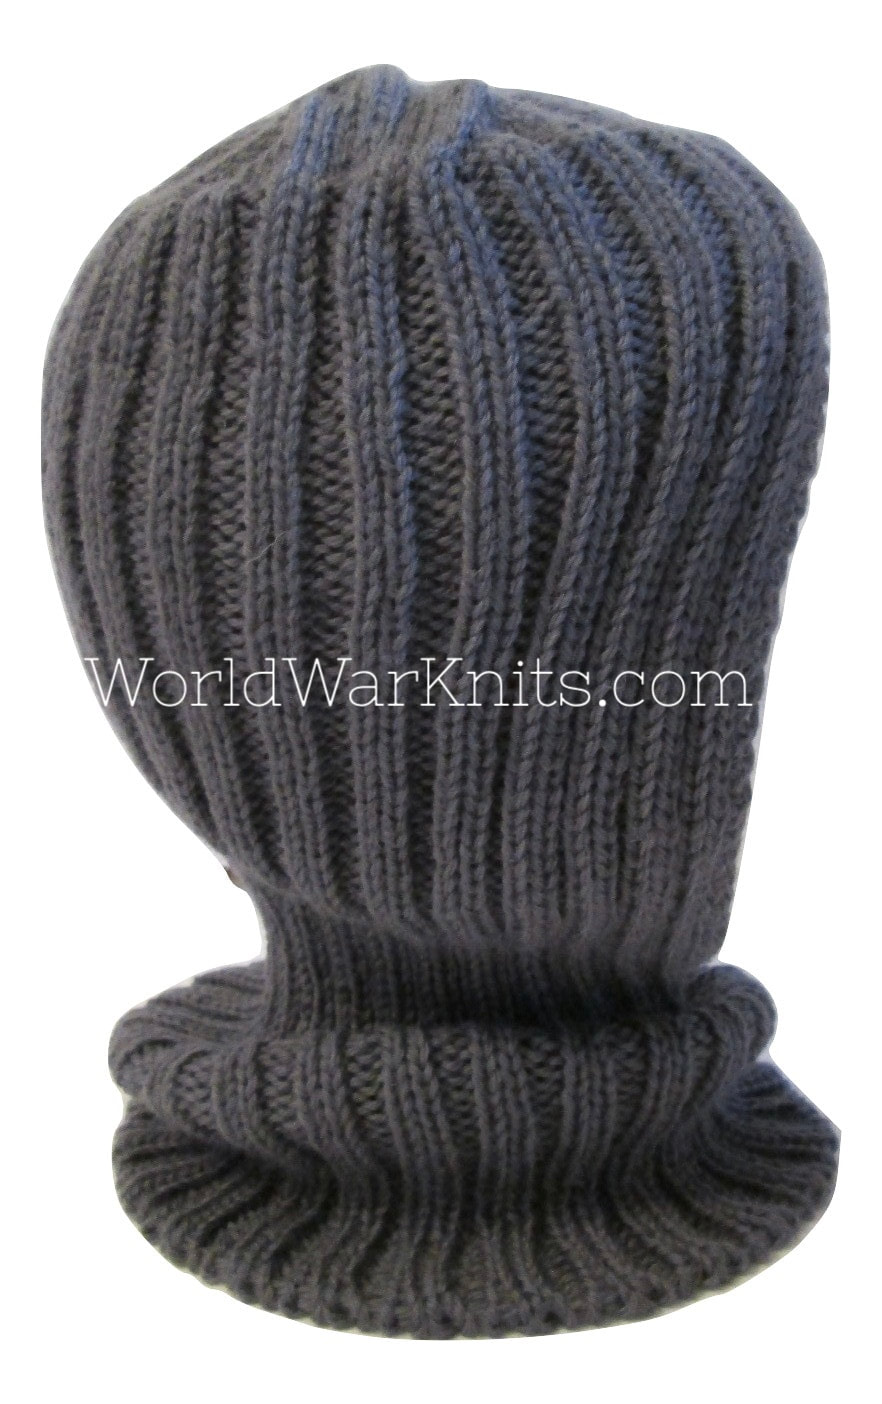 Handmade Knitted WWI Great War Balaclava Helmet